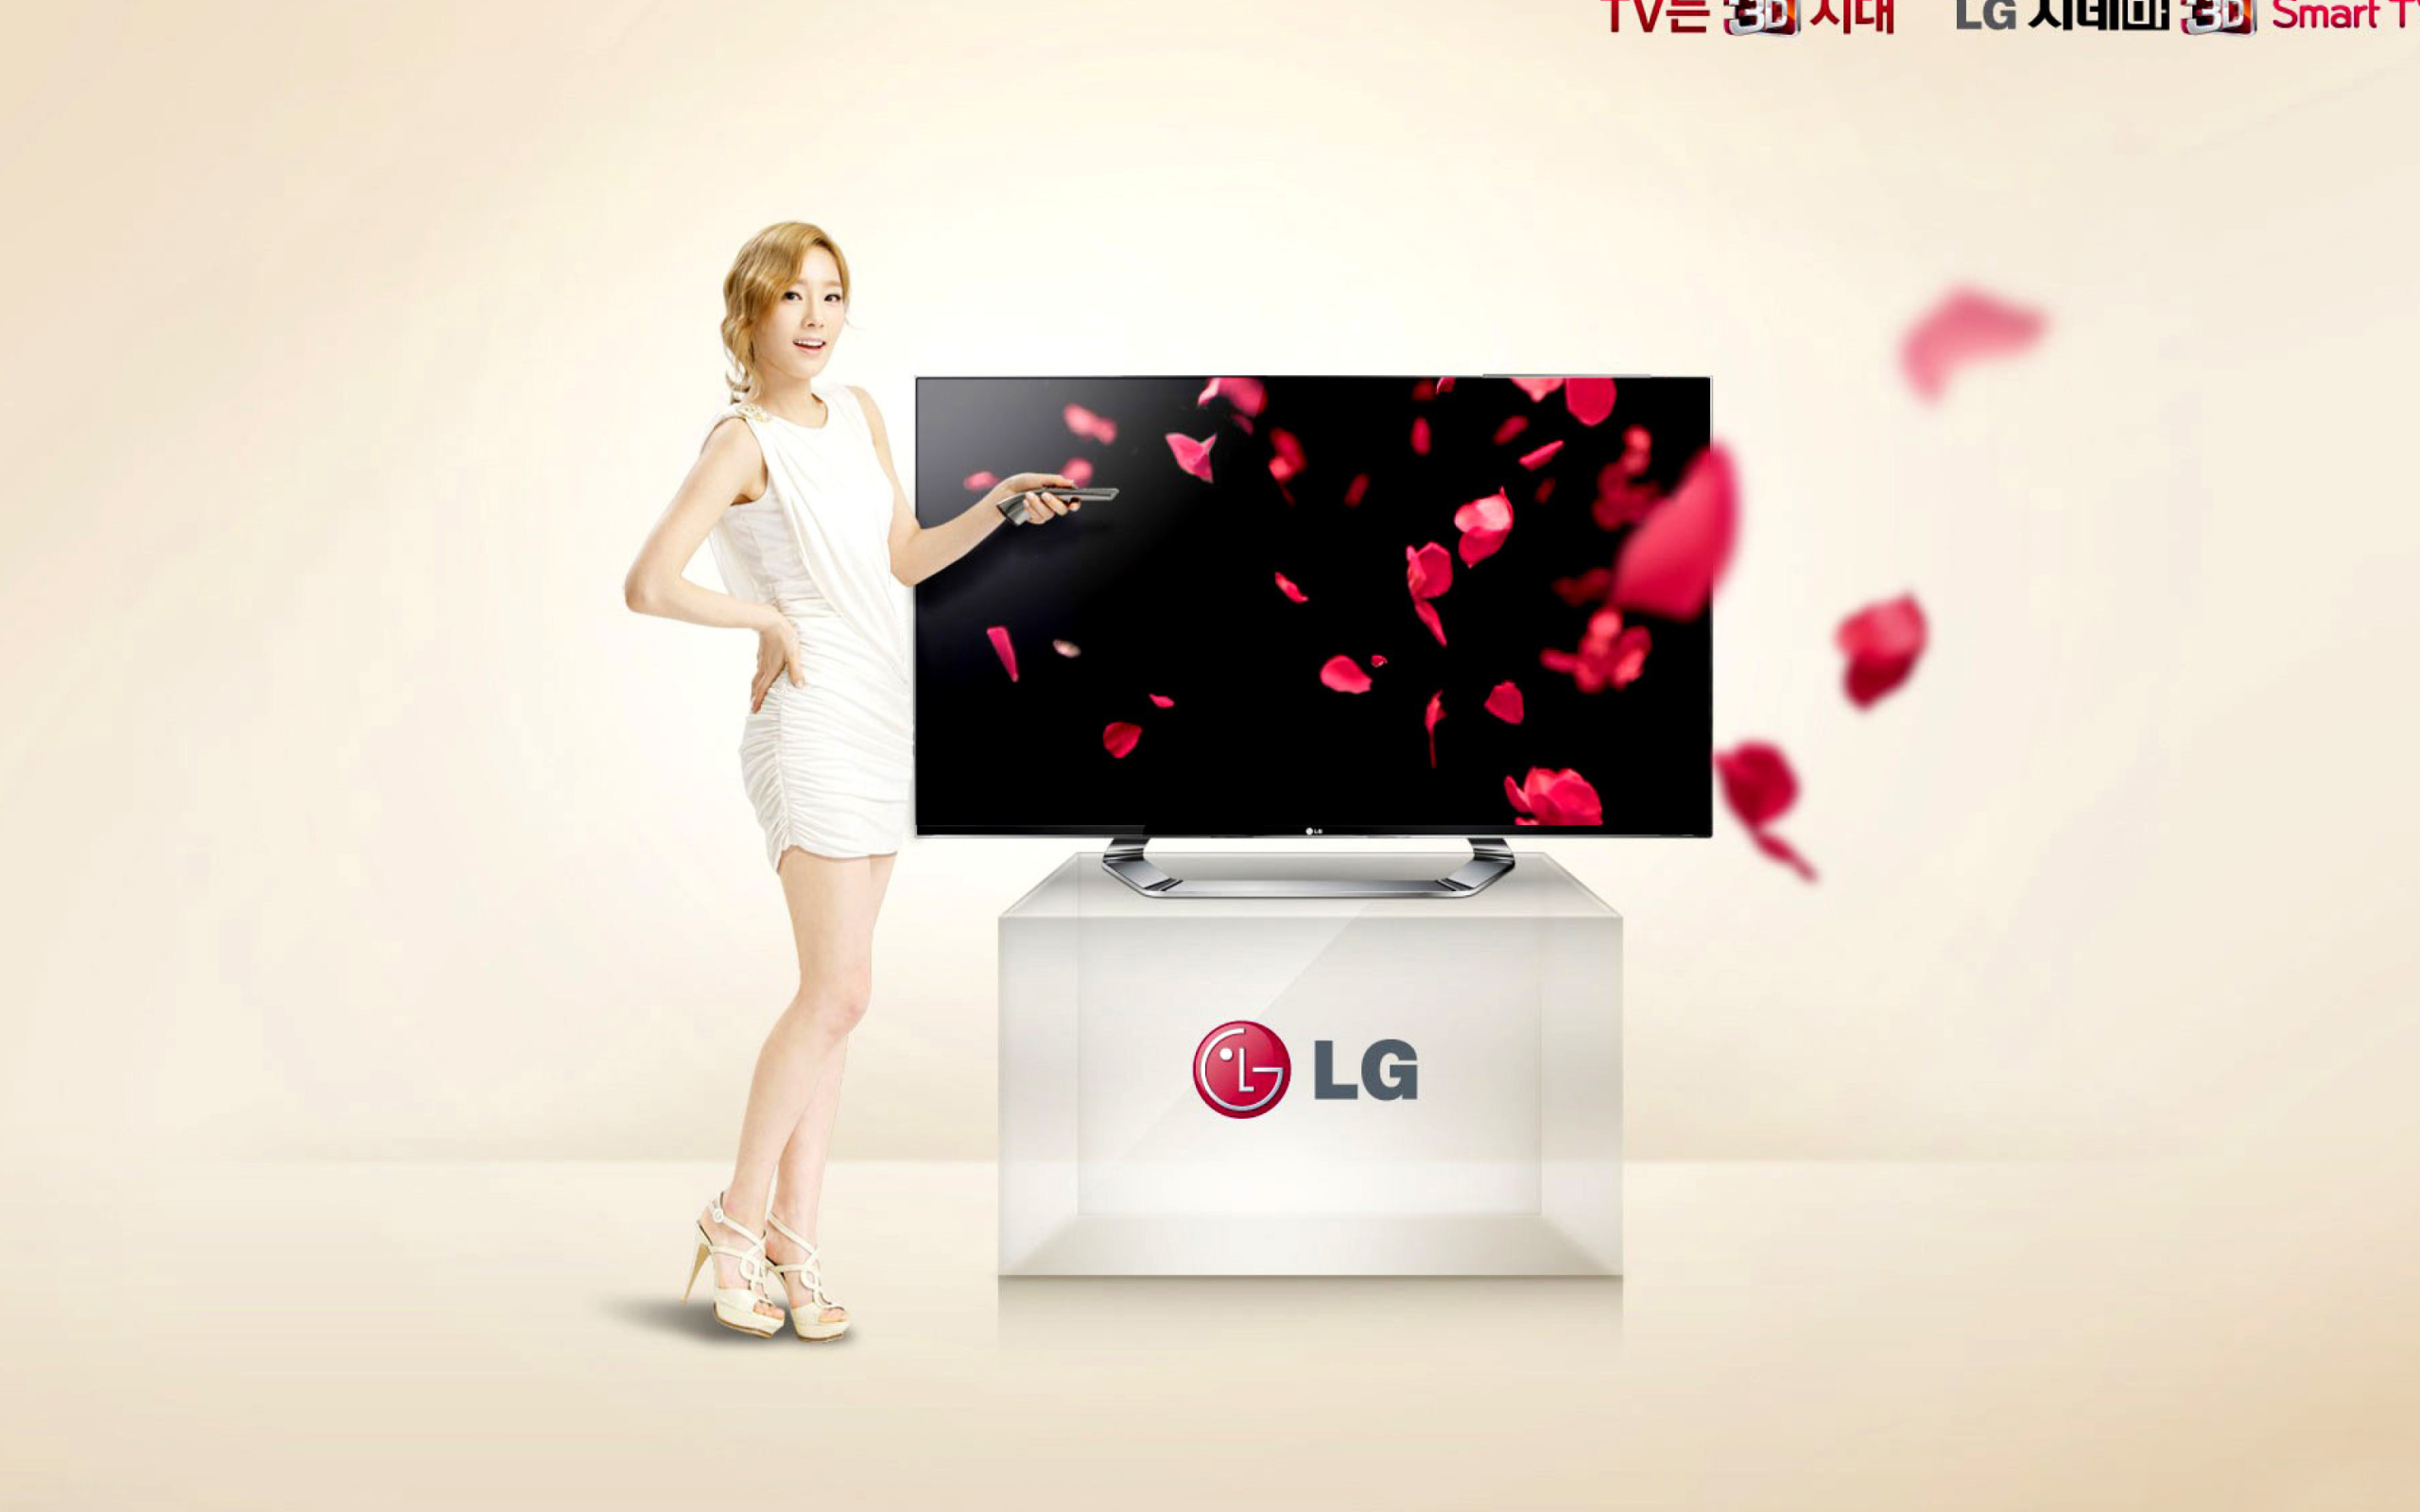 LG Smart TV wallpaper 2560x1600